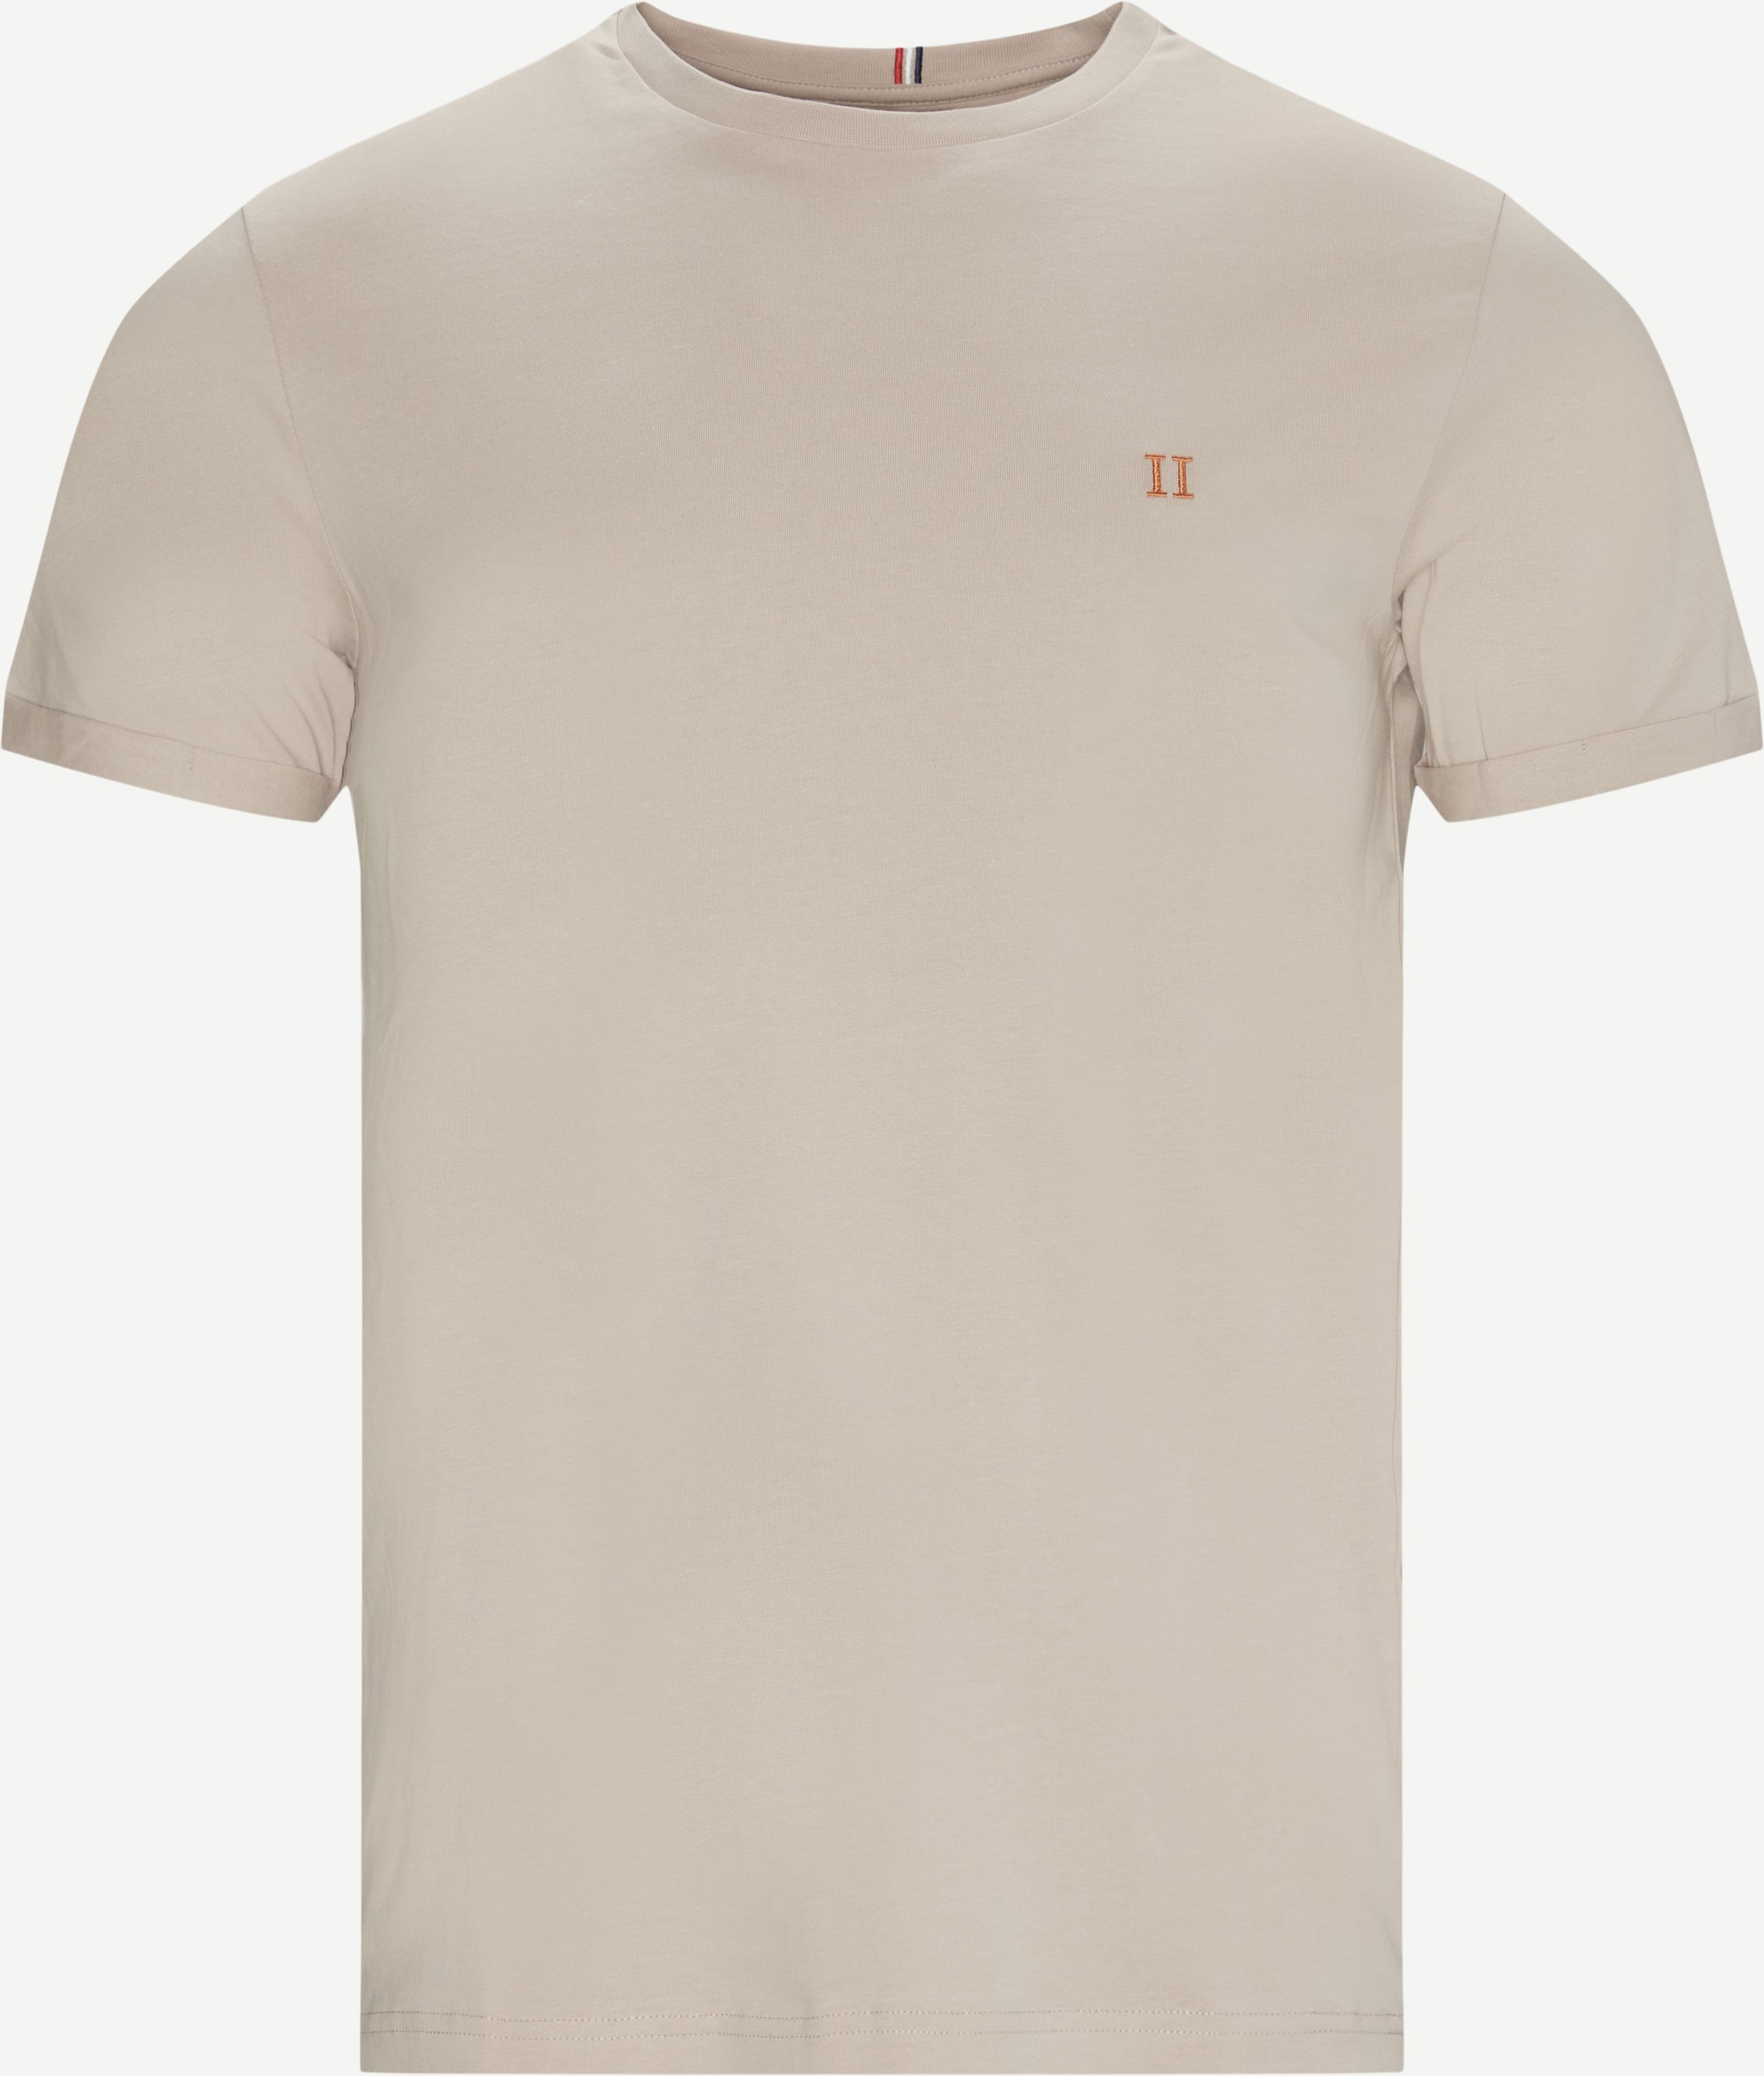 Nørregaard T-shirt - T-shirts - Regular fit - Pink